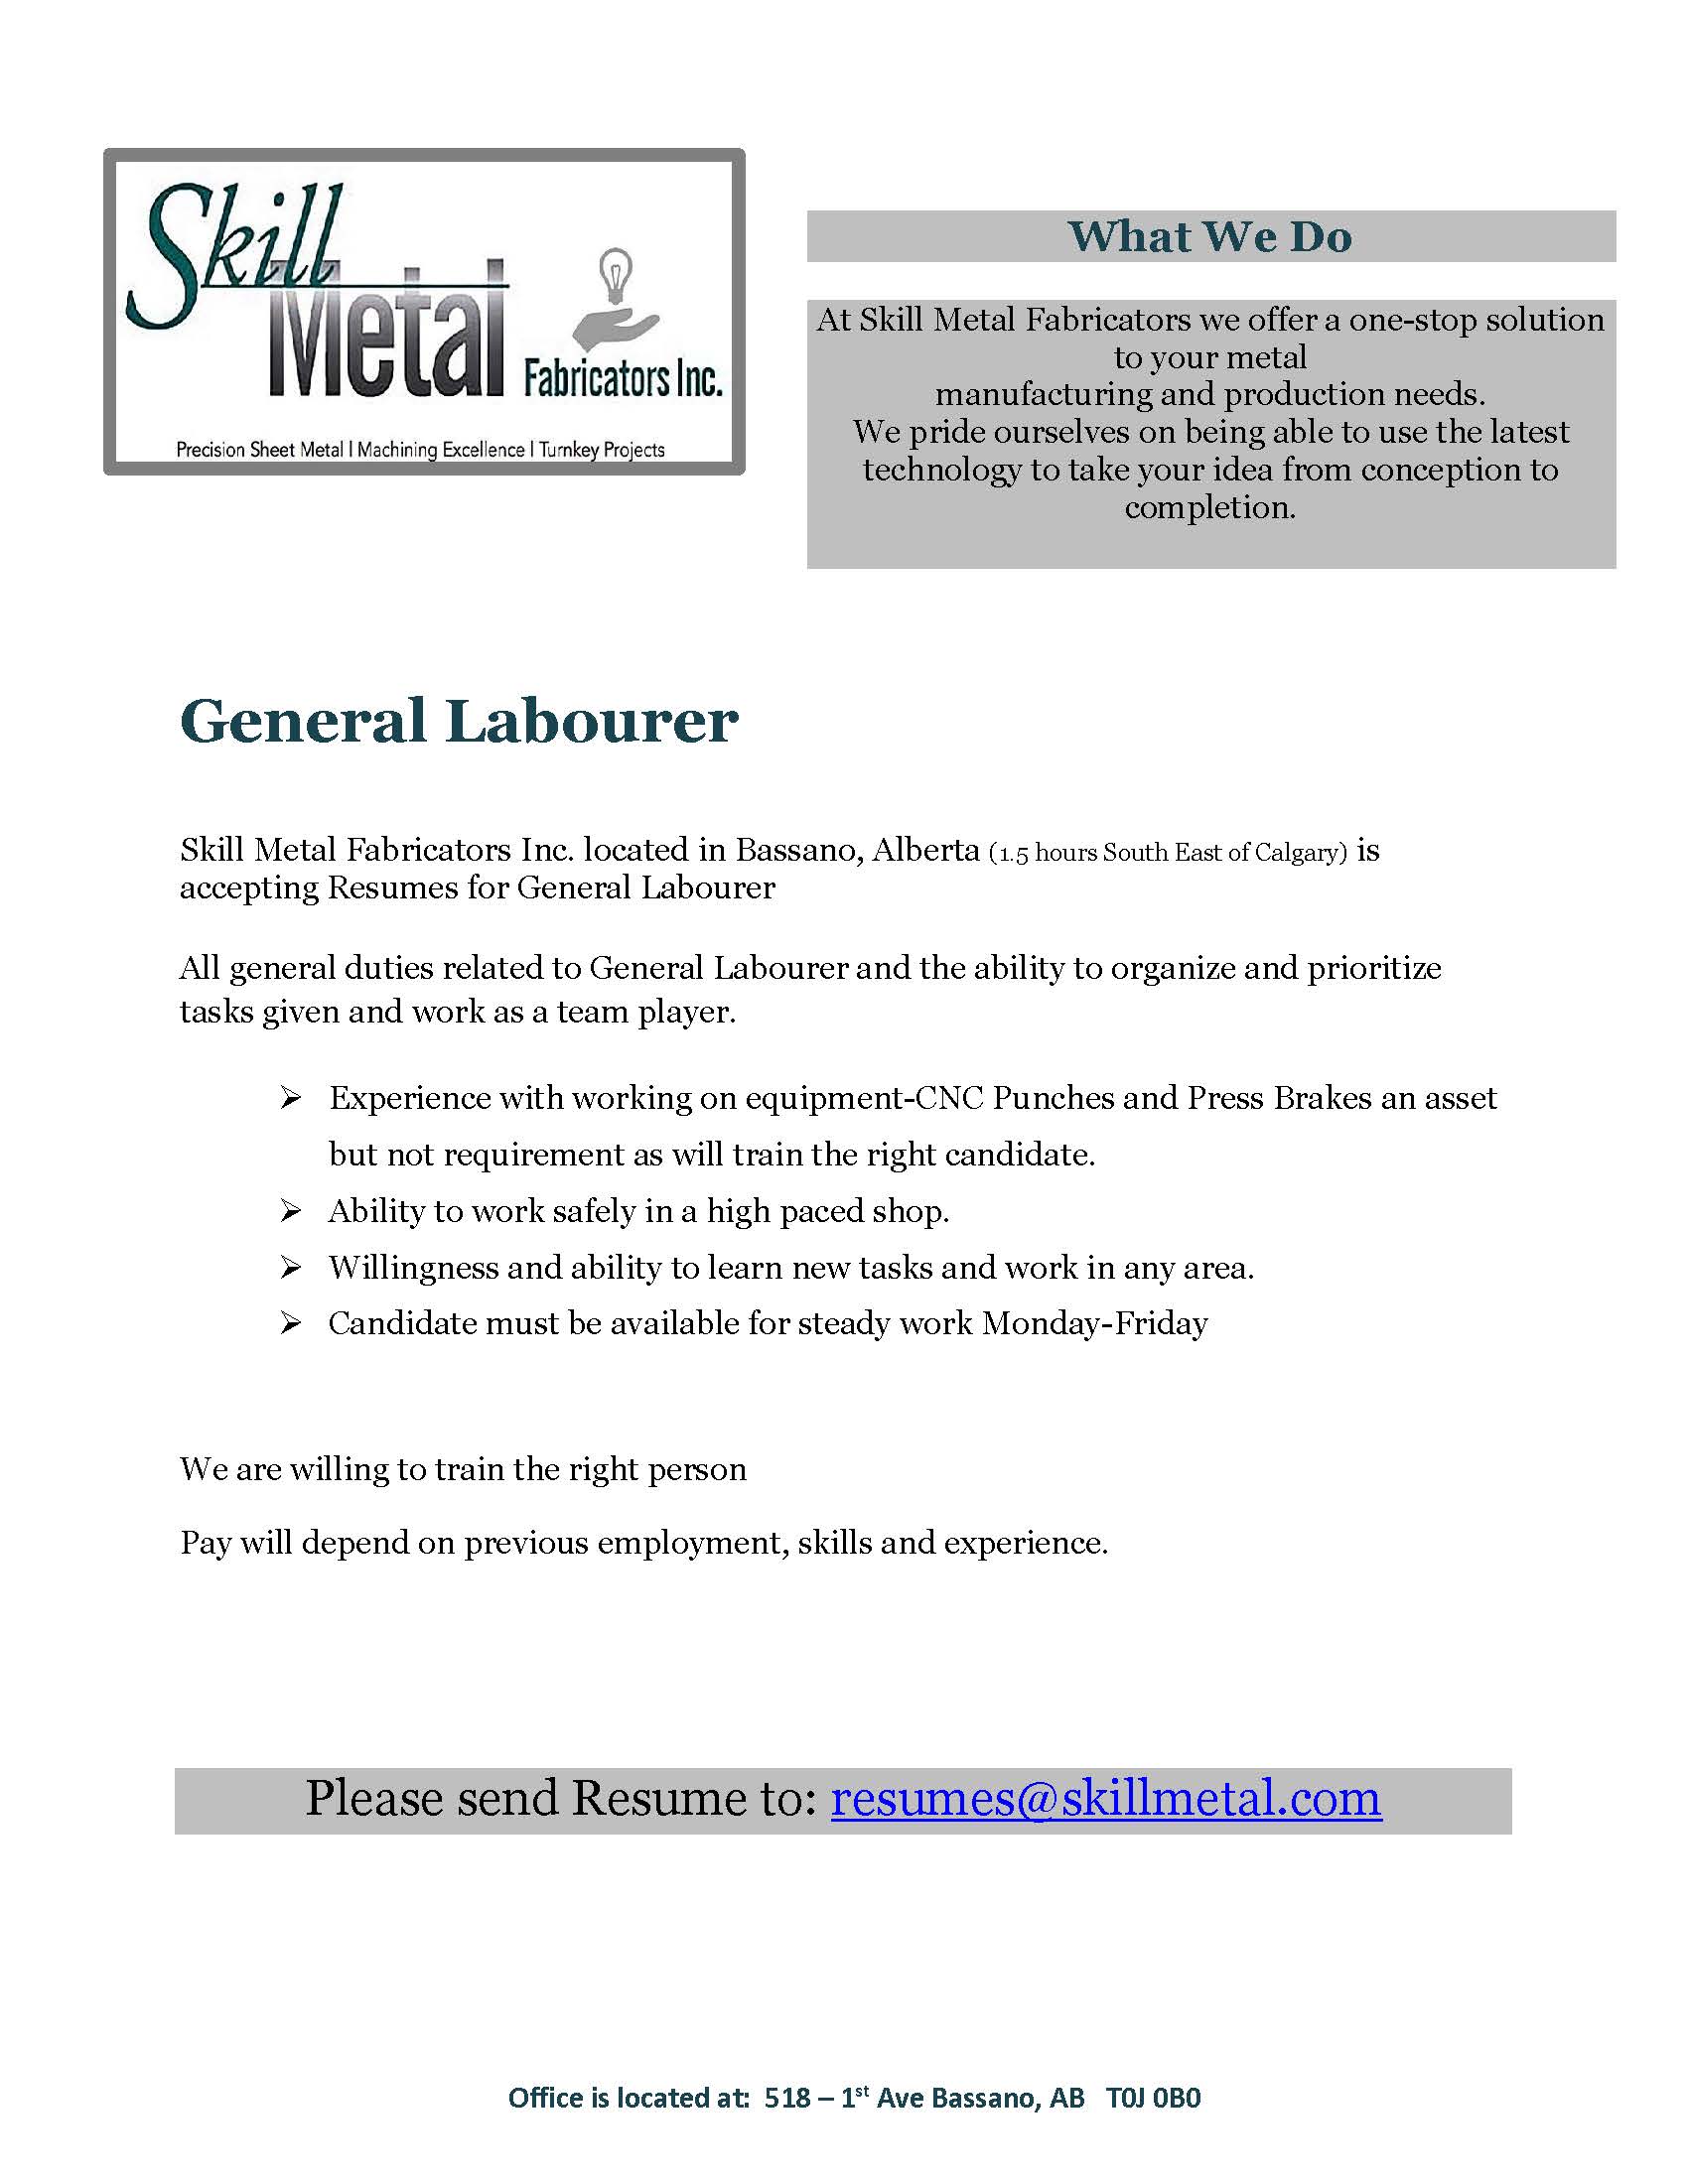 Help Wanted - General Labourer Skill Metal Fabricators 2022 (002)